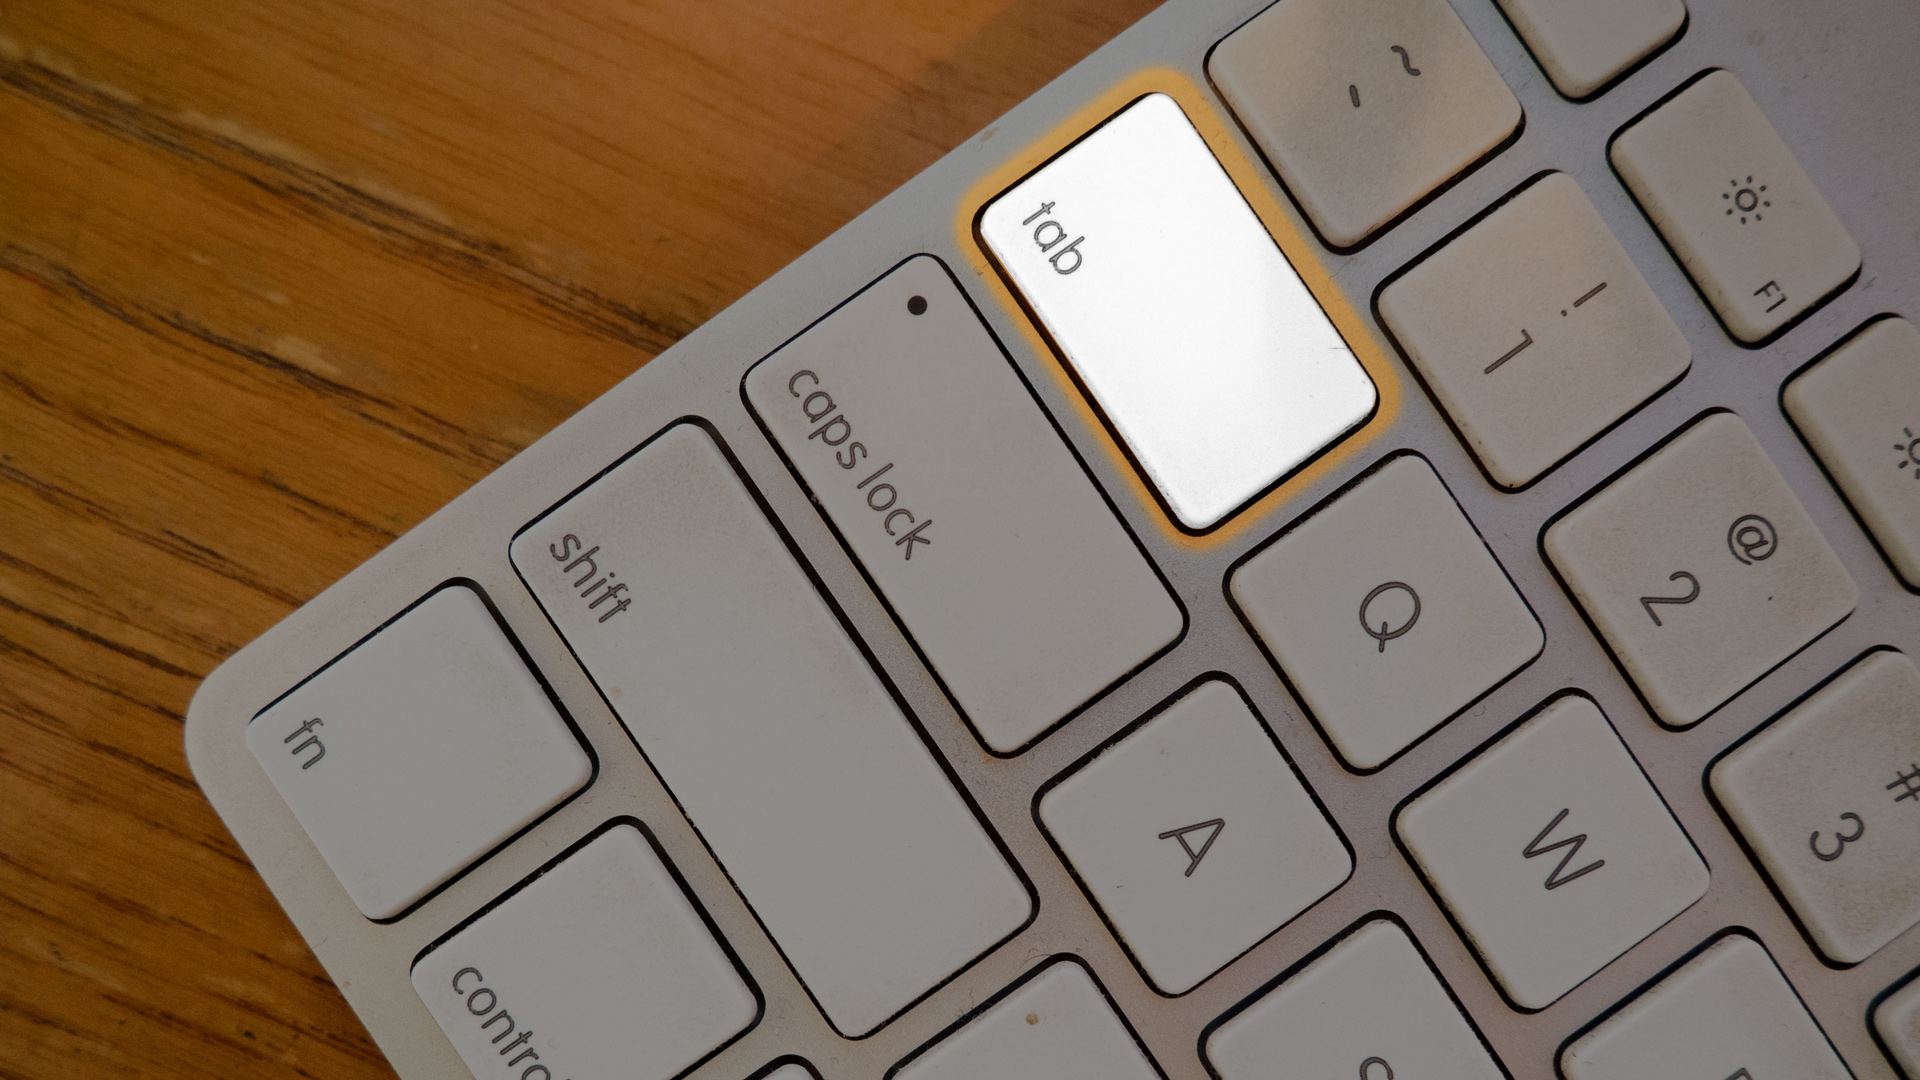 Keyboard with the Tab key glowing